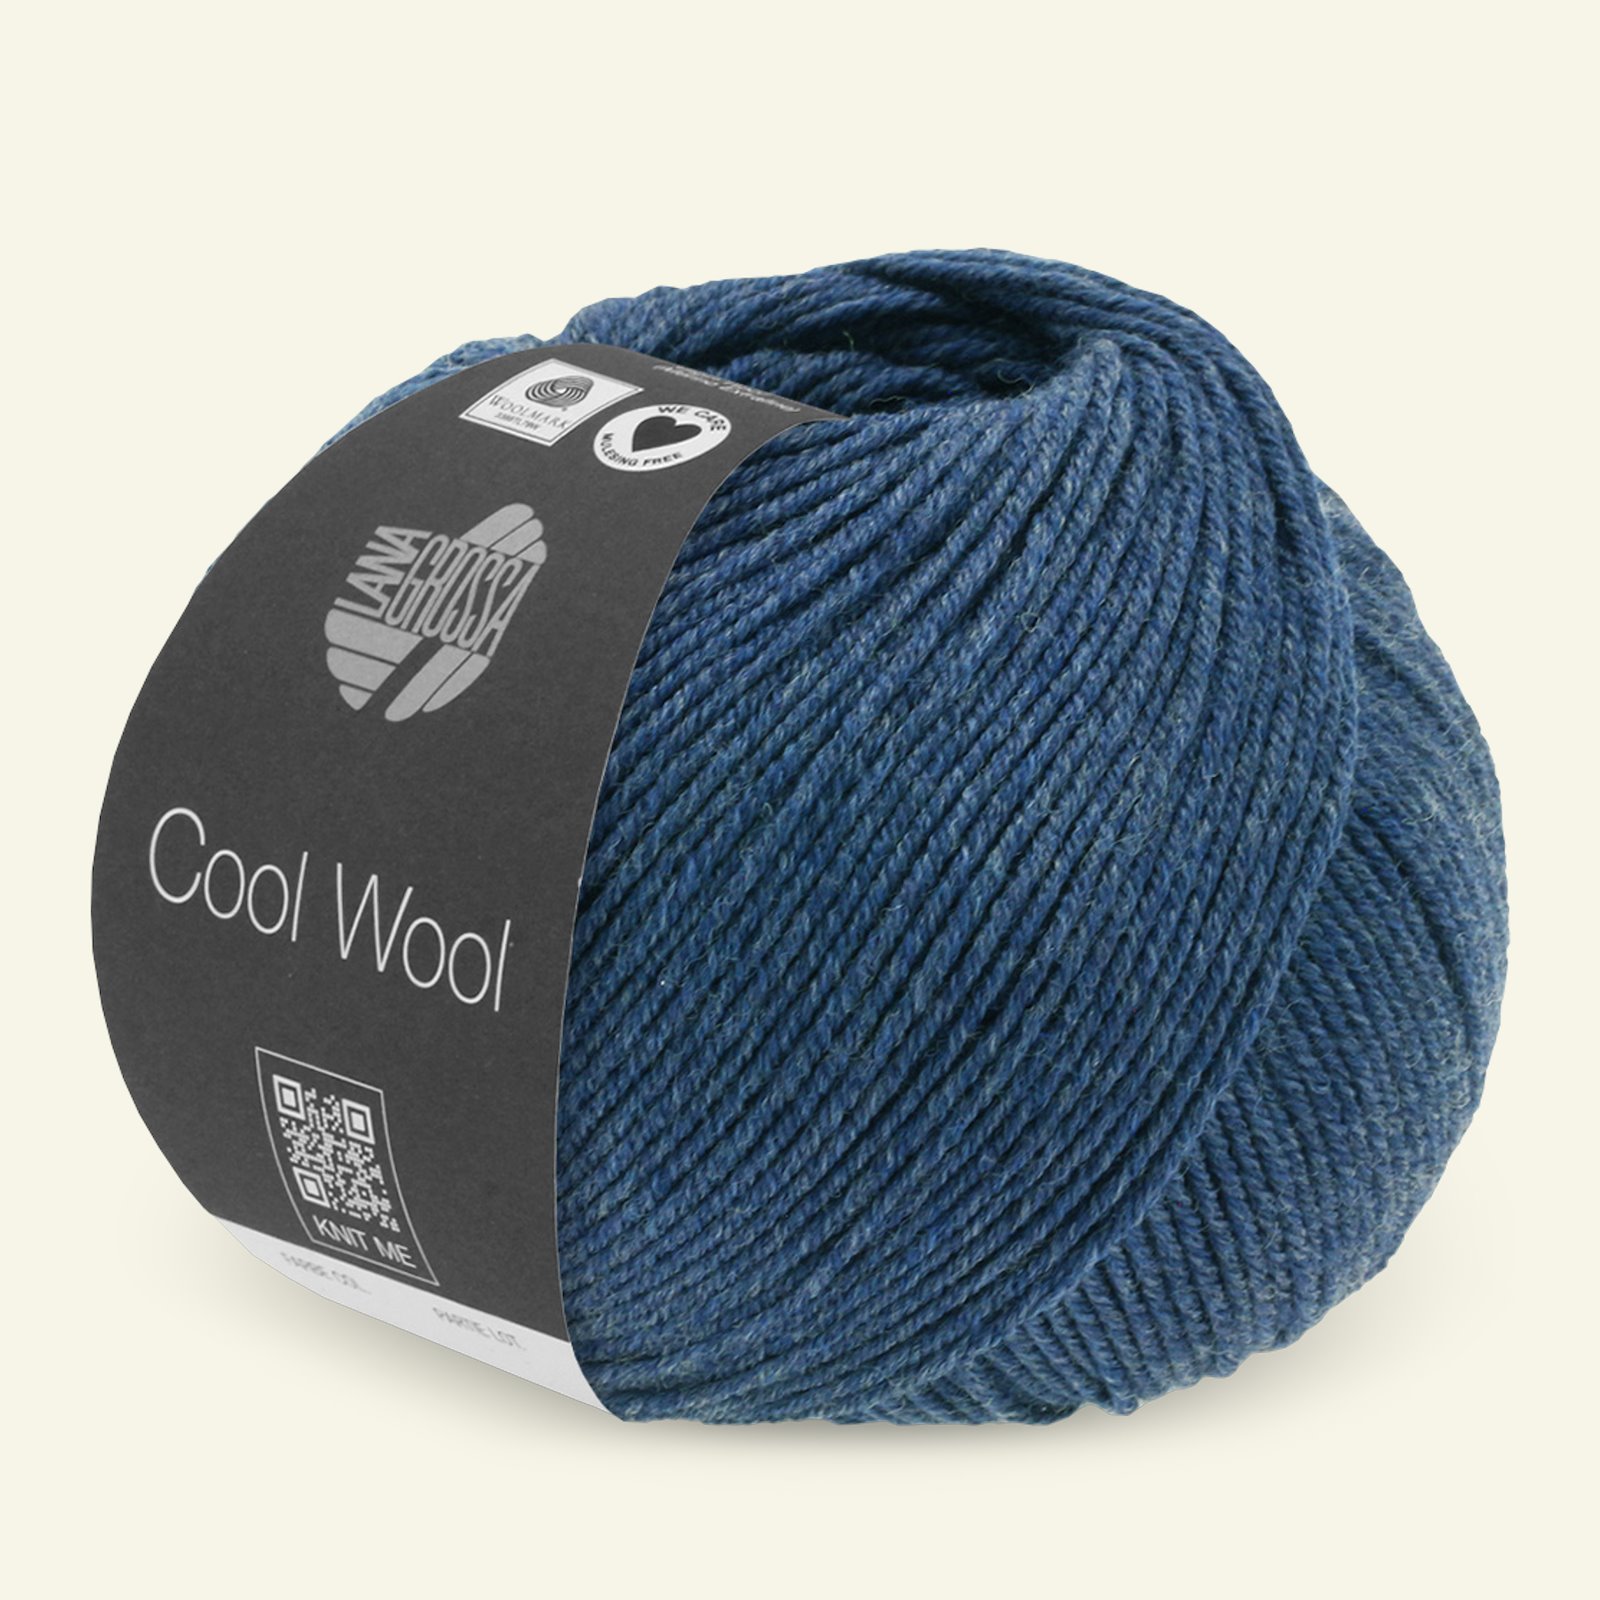 Lana Grossa, extrafine merino wool yarn "Cool Wool", dark blue mel. 90001114_pack